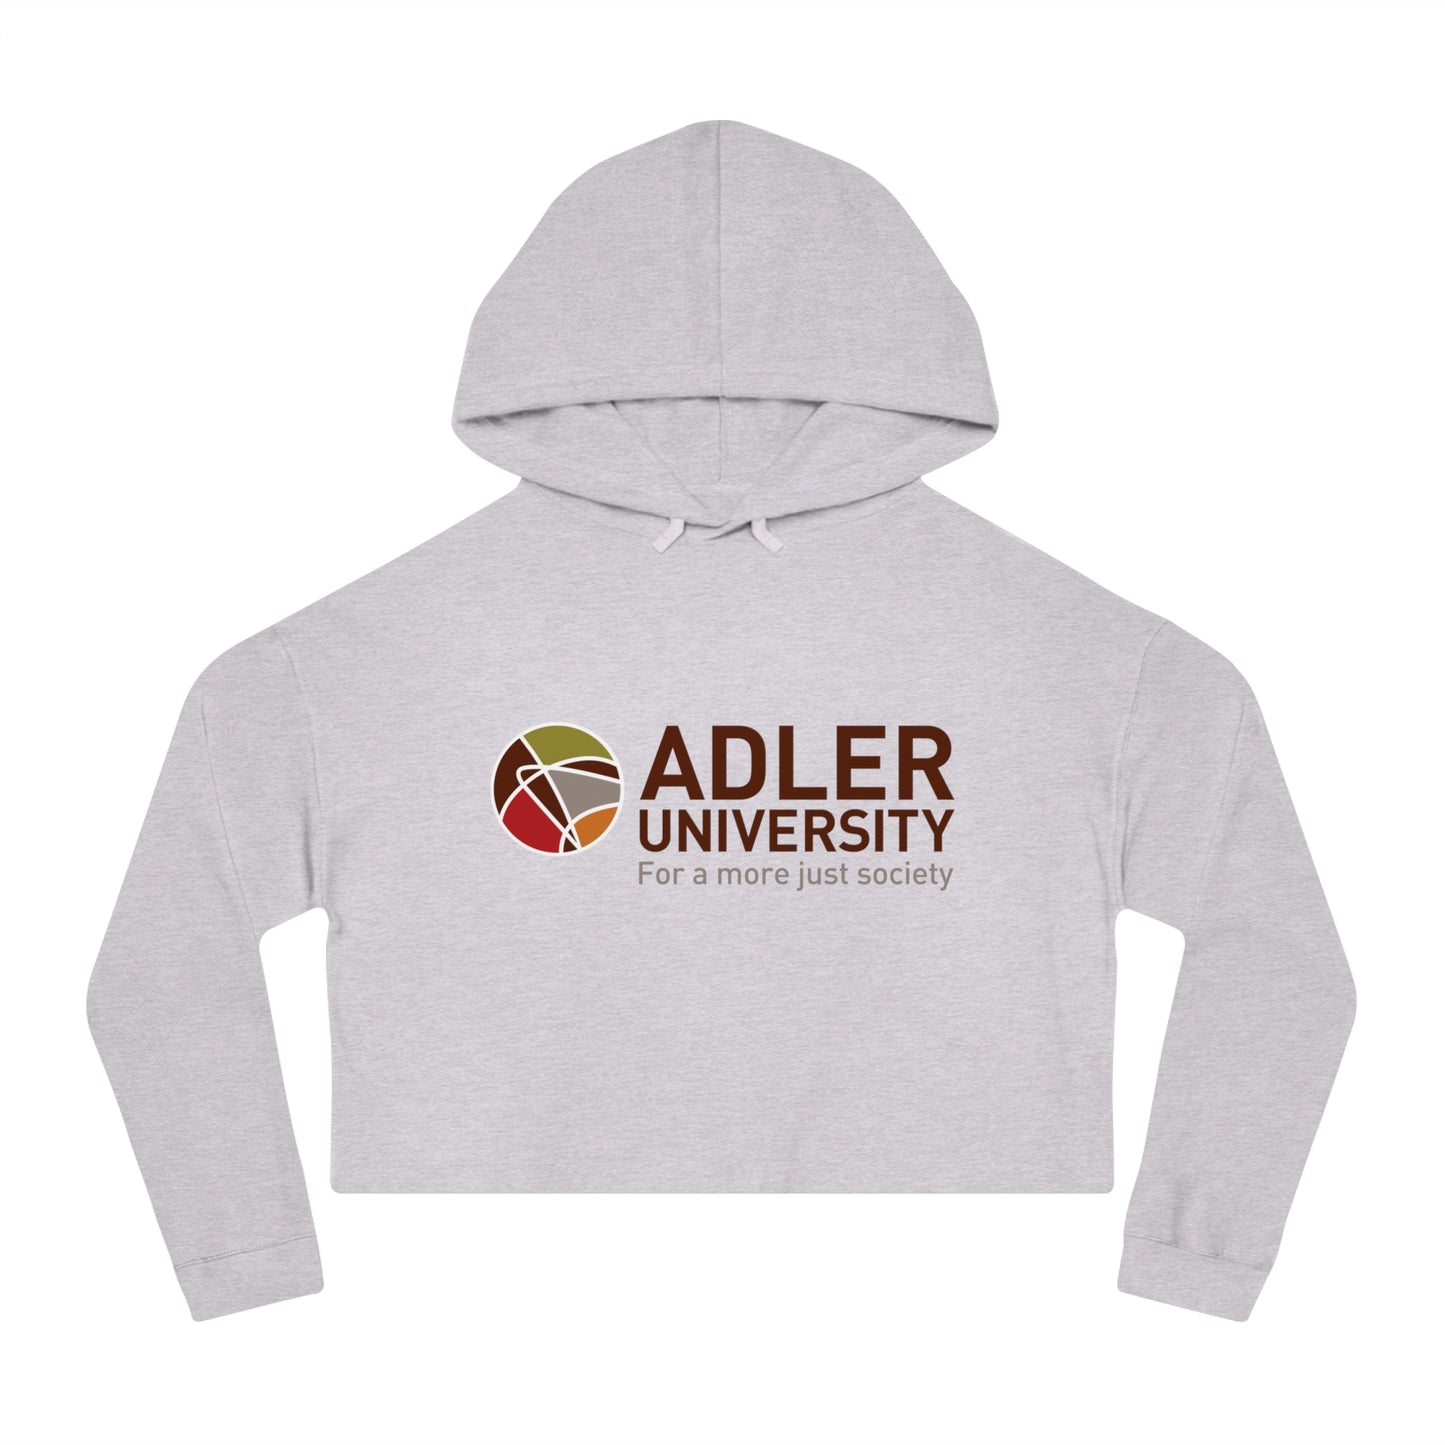 Adler University Cropped Hooded Sweatshirt